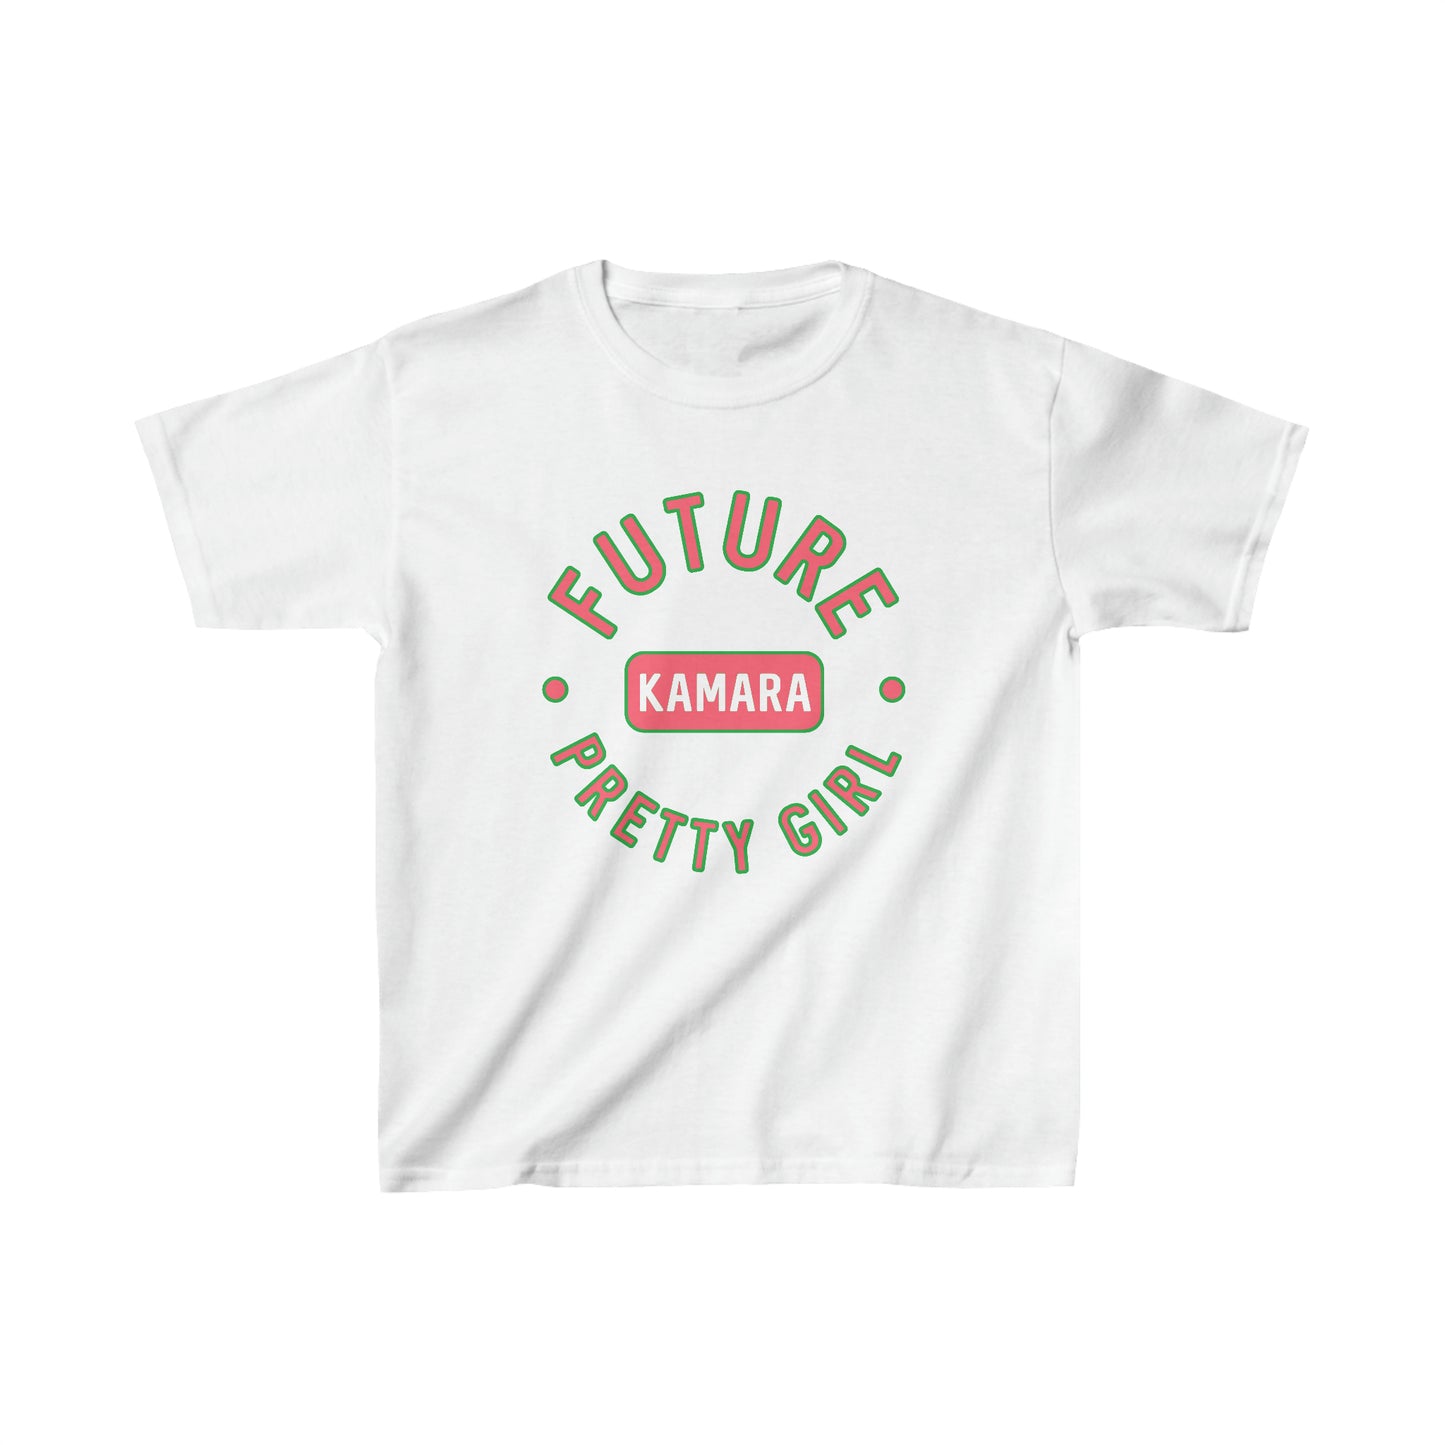 Personalized Name Future Pretty Girl  - Kids T-Shirt